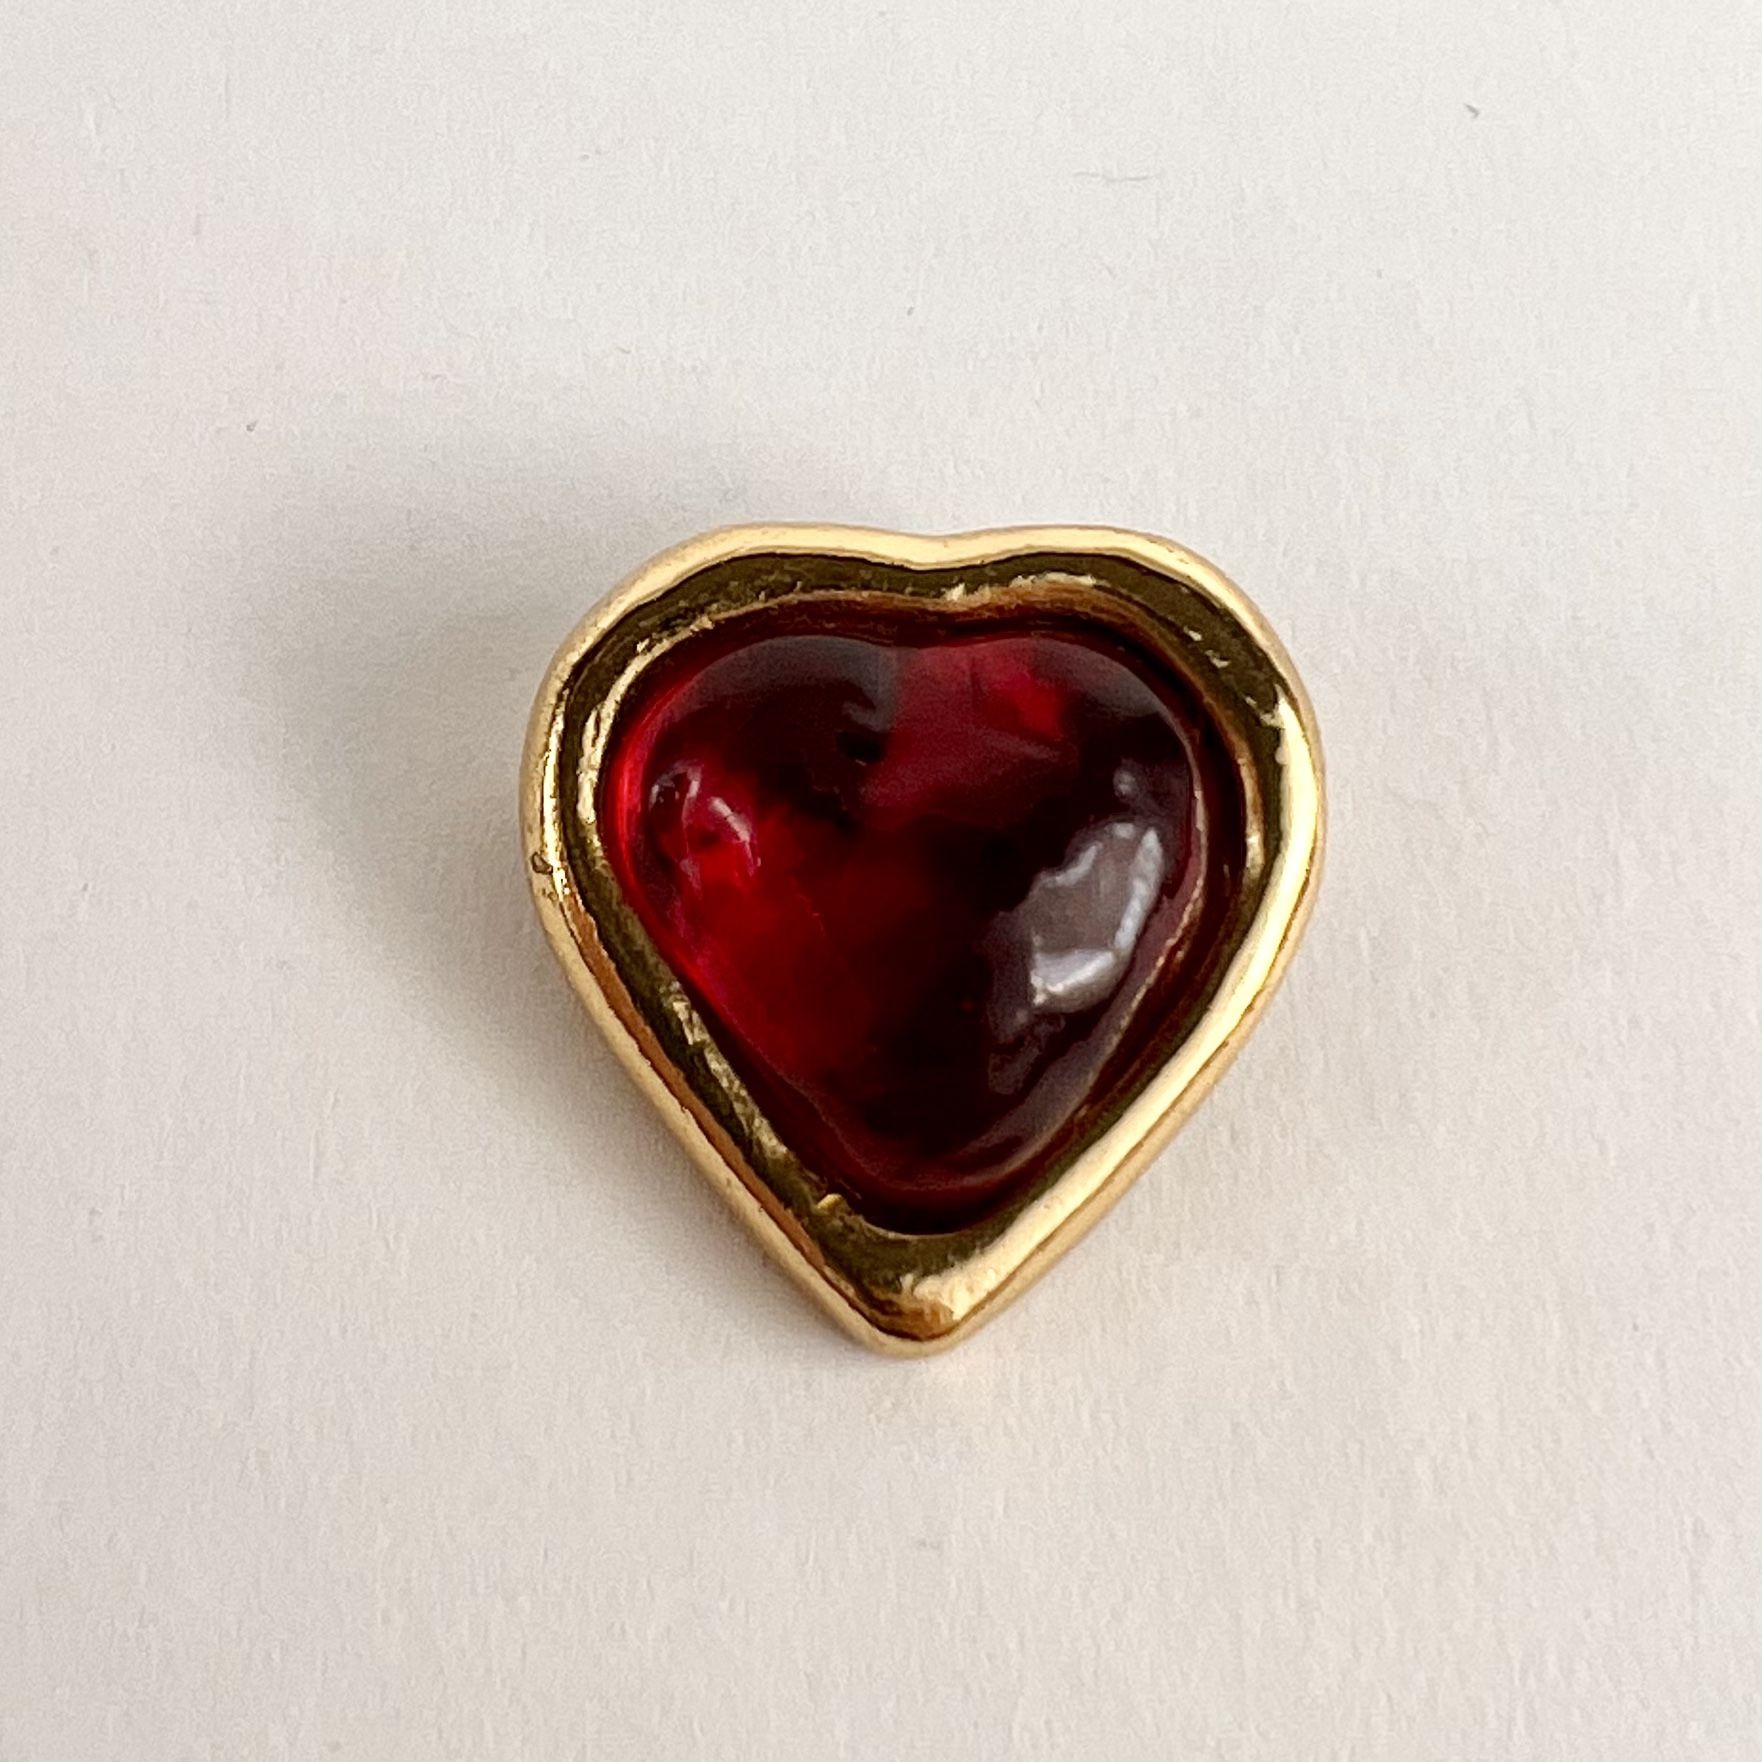 Yves Saint Laurent Vintage Heart Pin/Broach